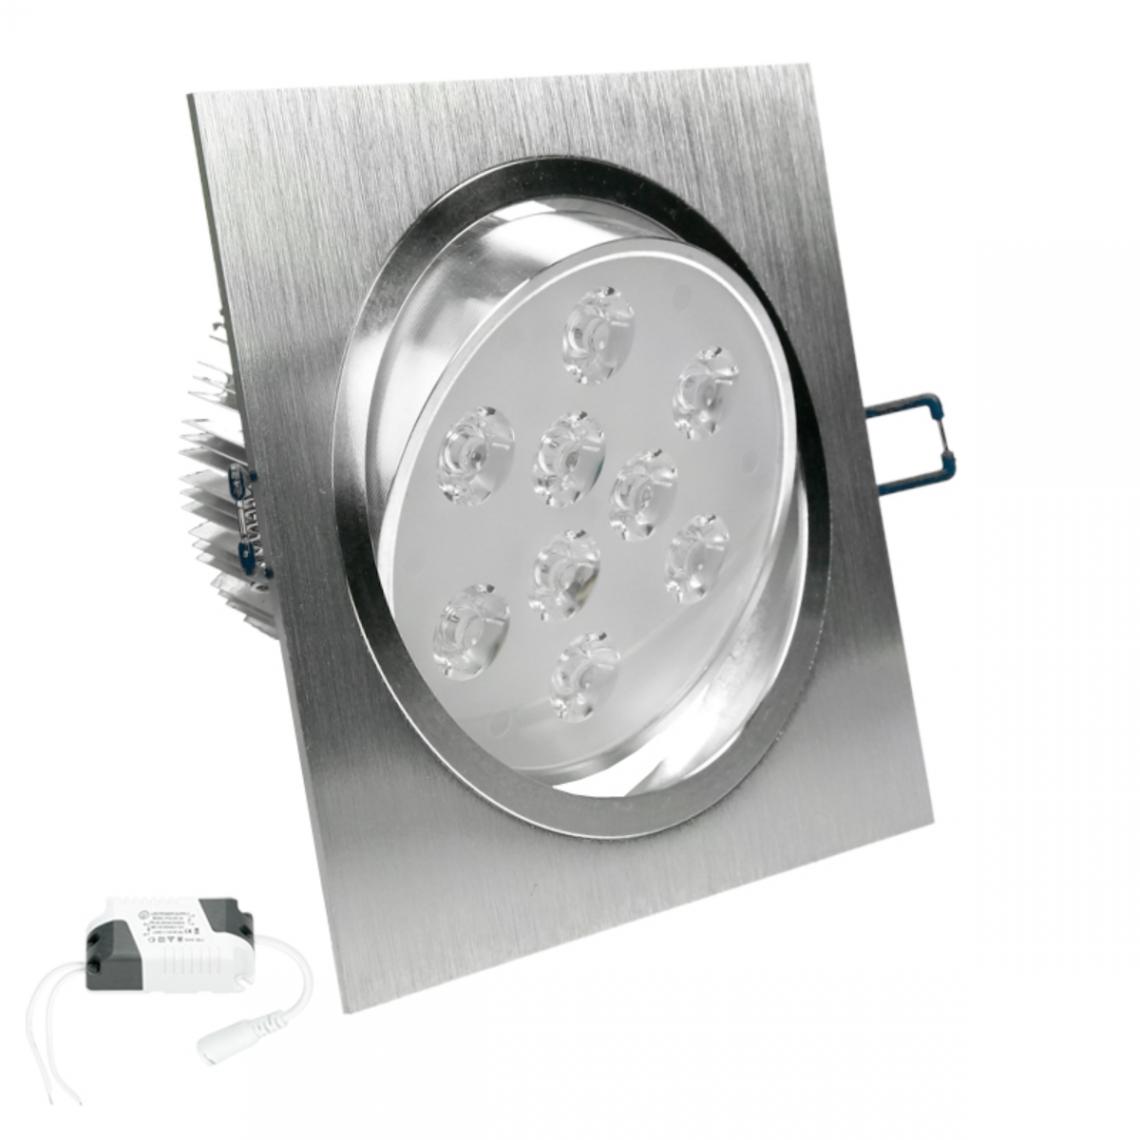 Ecd Germany - ECD Germany 3 x LED Spot Encastre - 9W 220-240 - Dimmable - 14 x 14 cm Carré - 668 lumens - Blanc froid 6000K - Pivotant 30 ° - IP44 - Ampoules LED - Dimmable Flat Spot Bulbs Spot - Ceiling Lamp - Lampe connectée